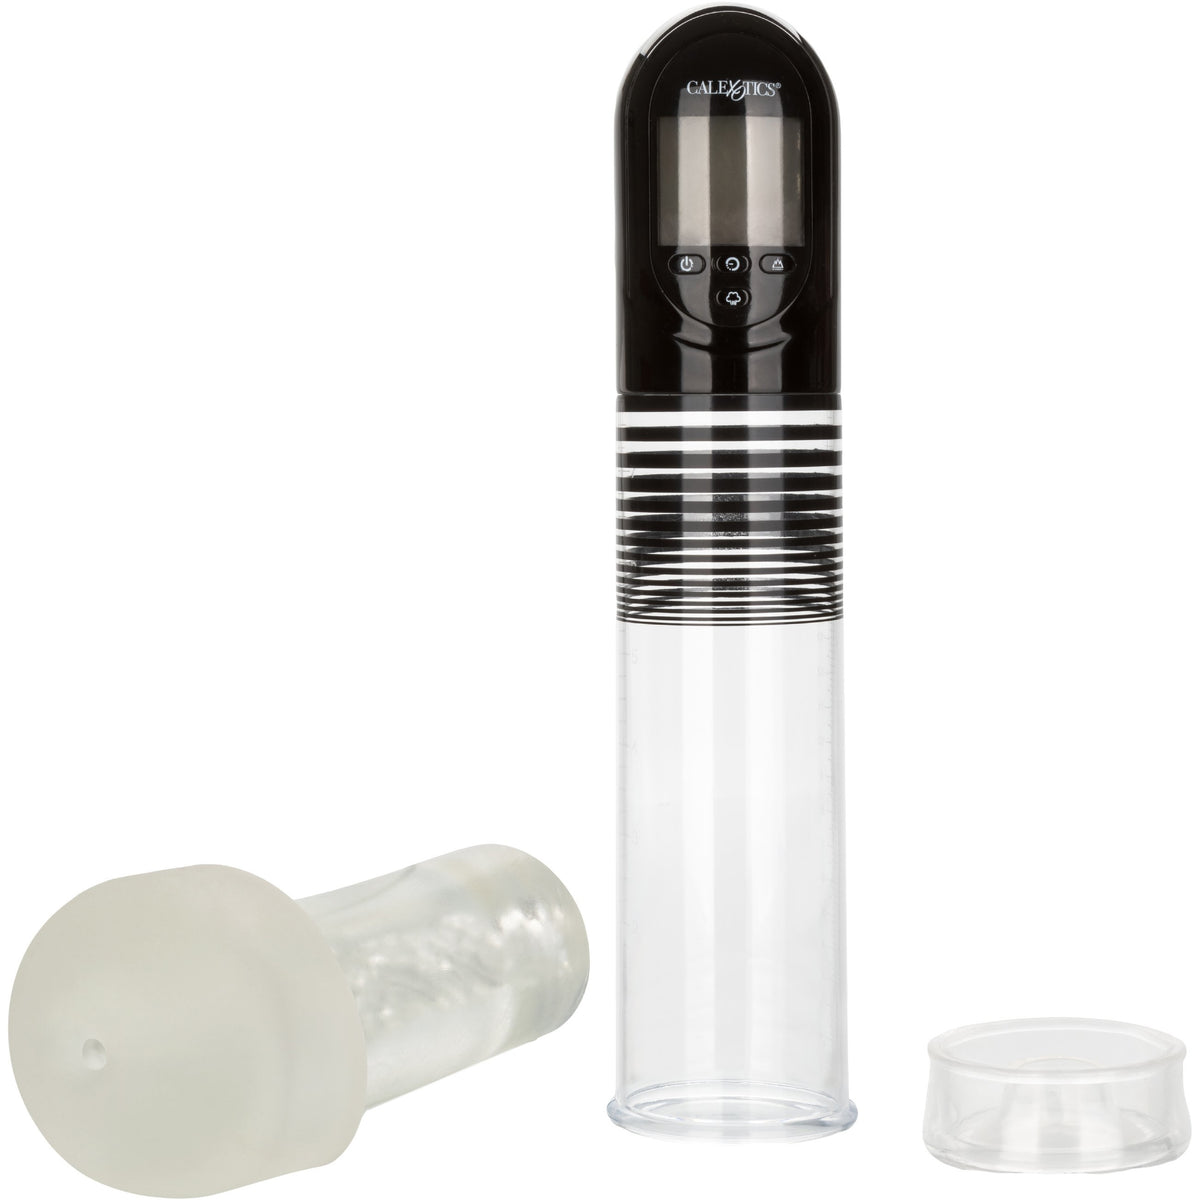 CalExotics Optimum Series - Advanced Automatic Smart Penis Pump